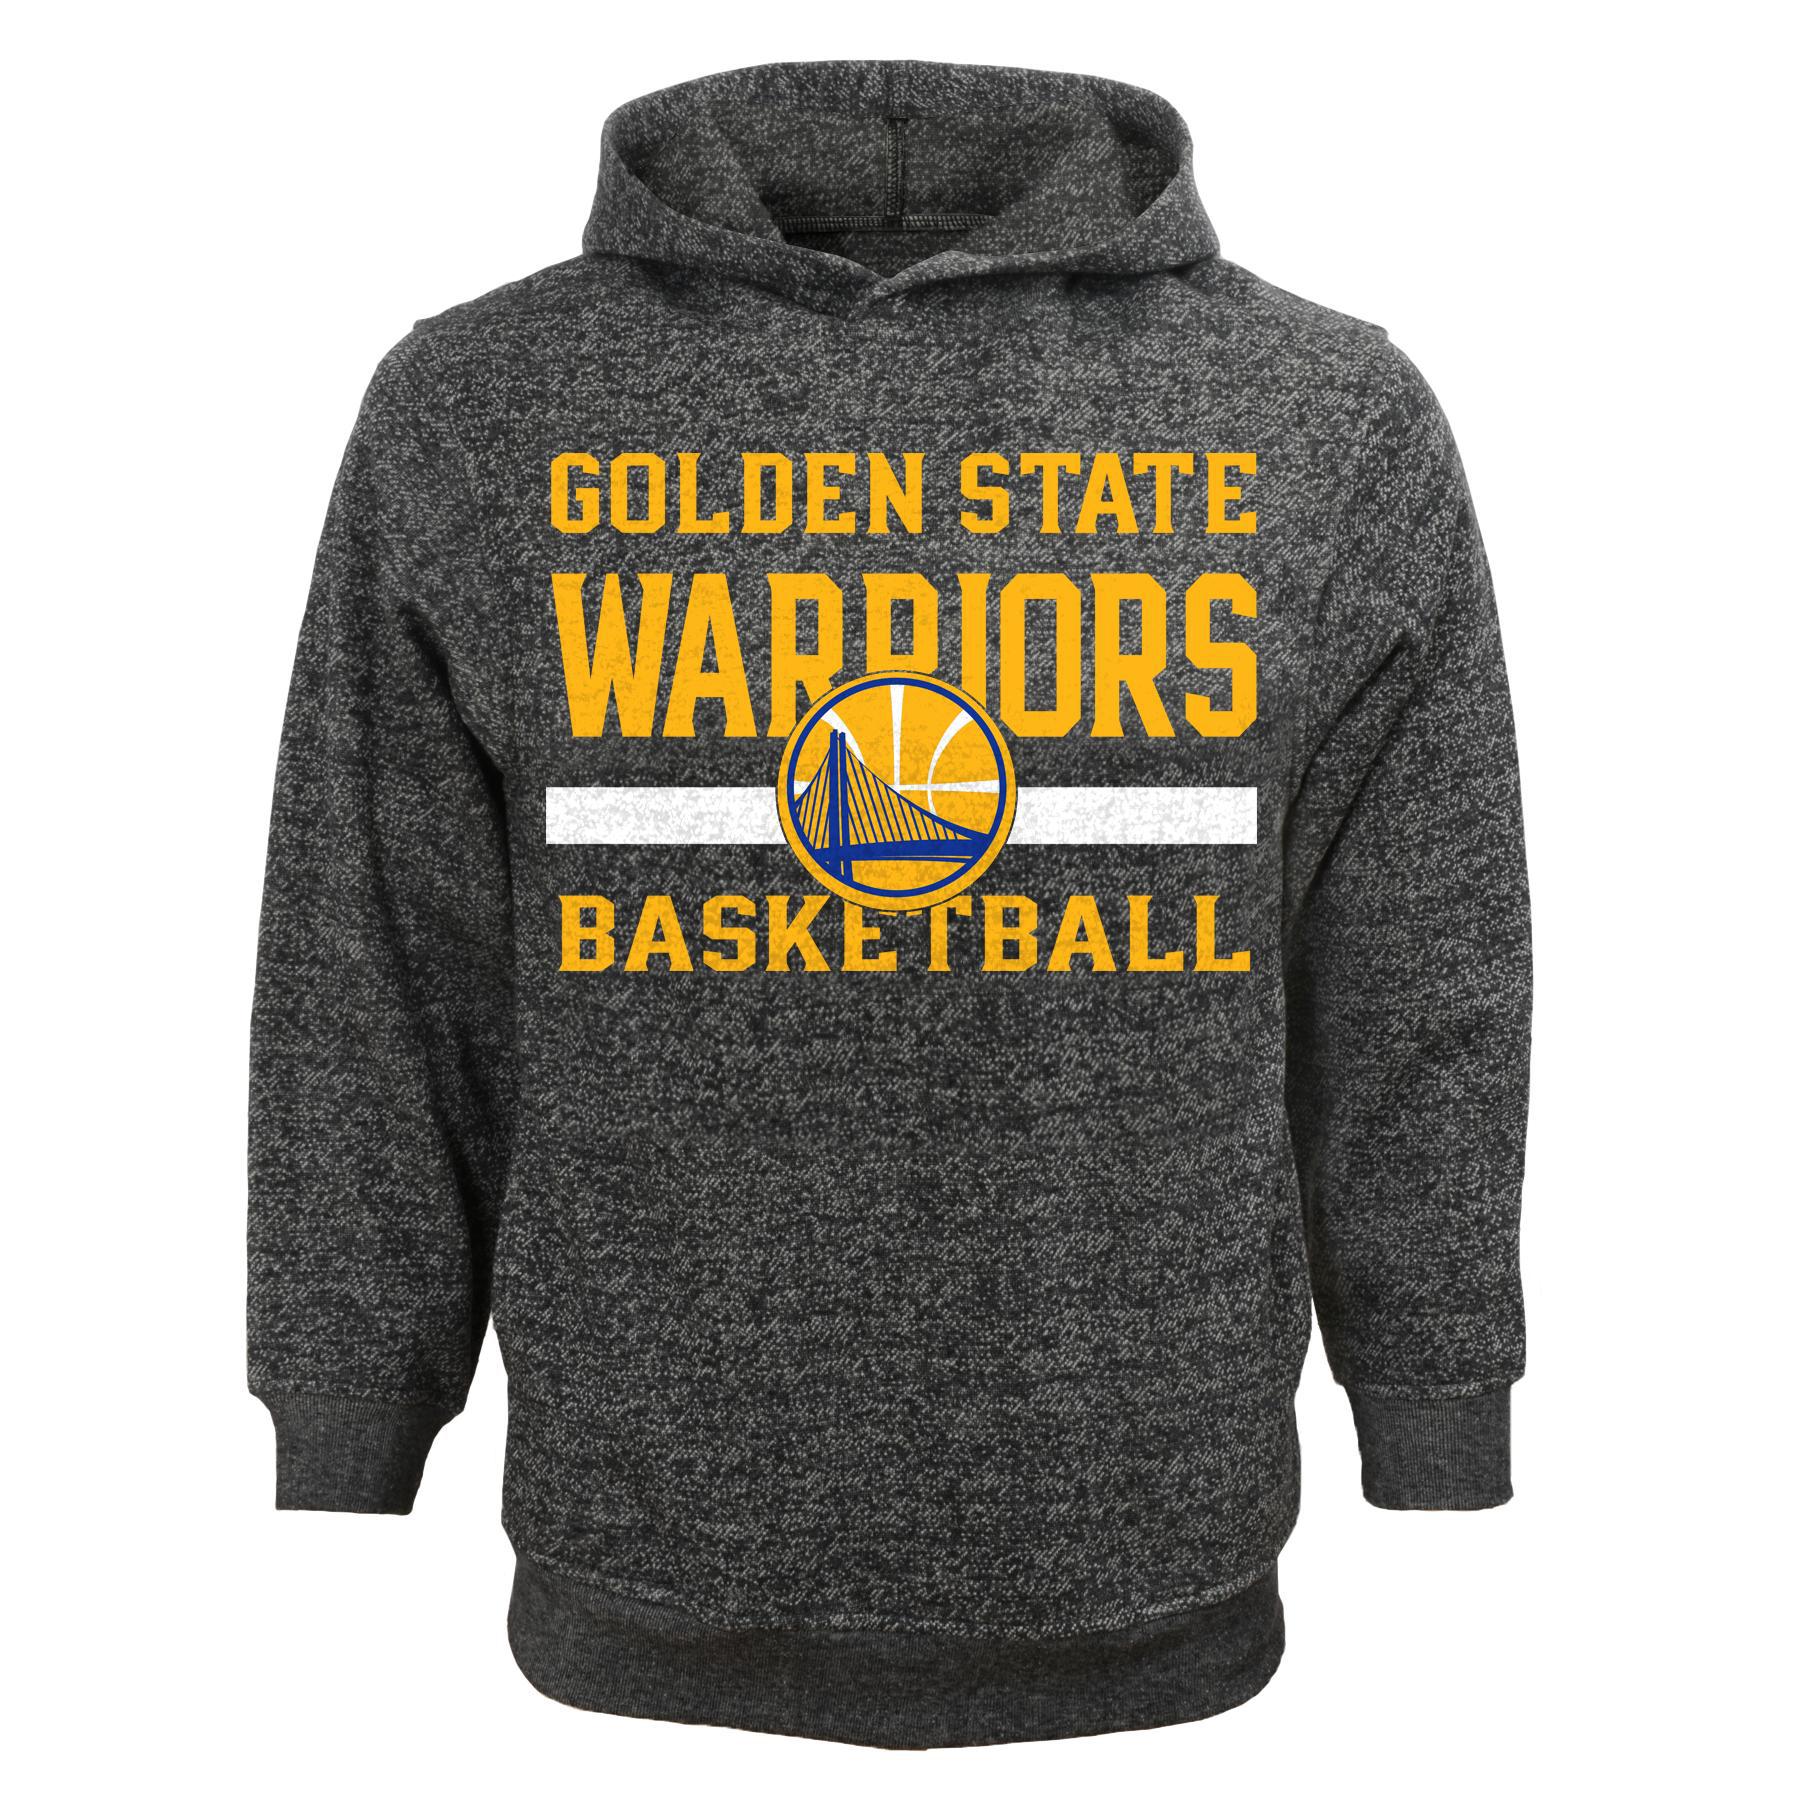 NBA Boys' Hooded Sweatshirt - Golden State Warriors